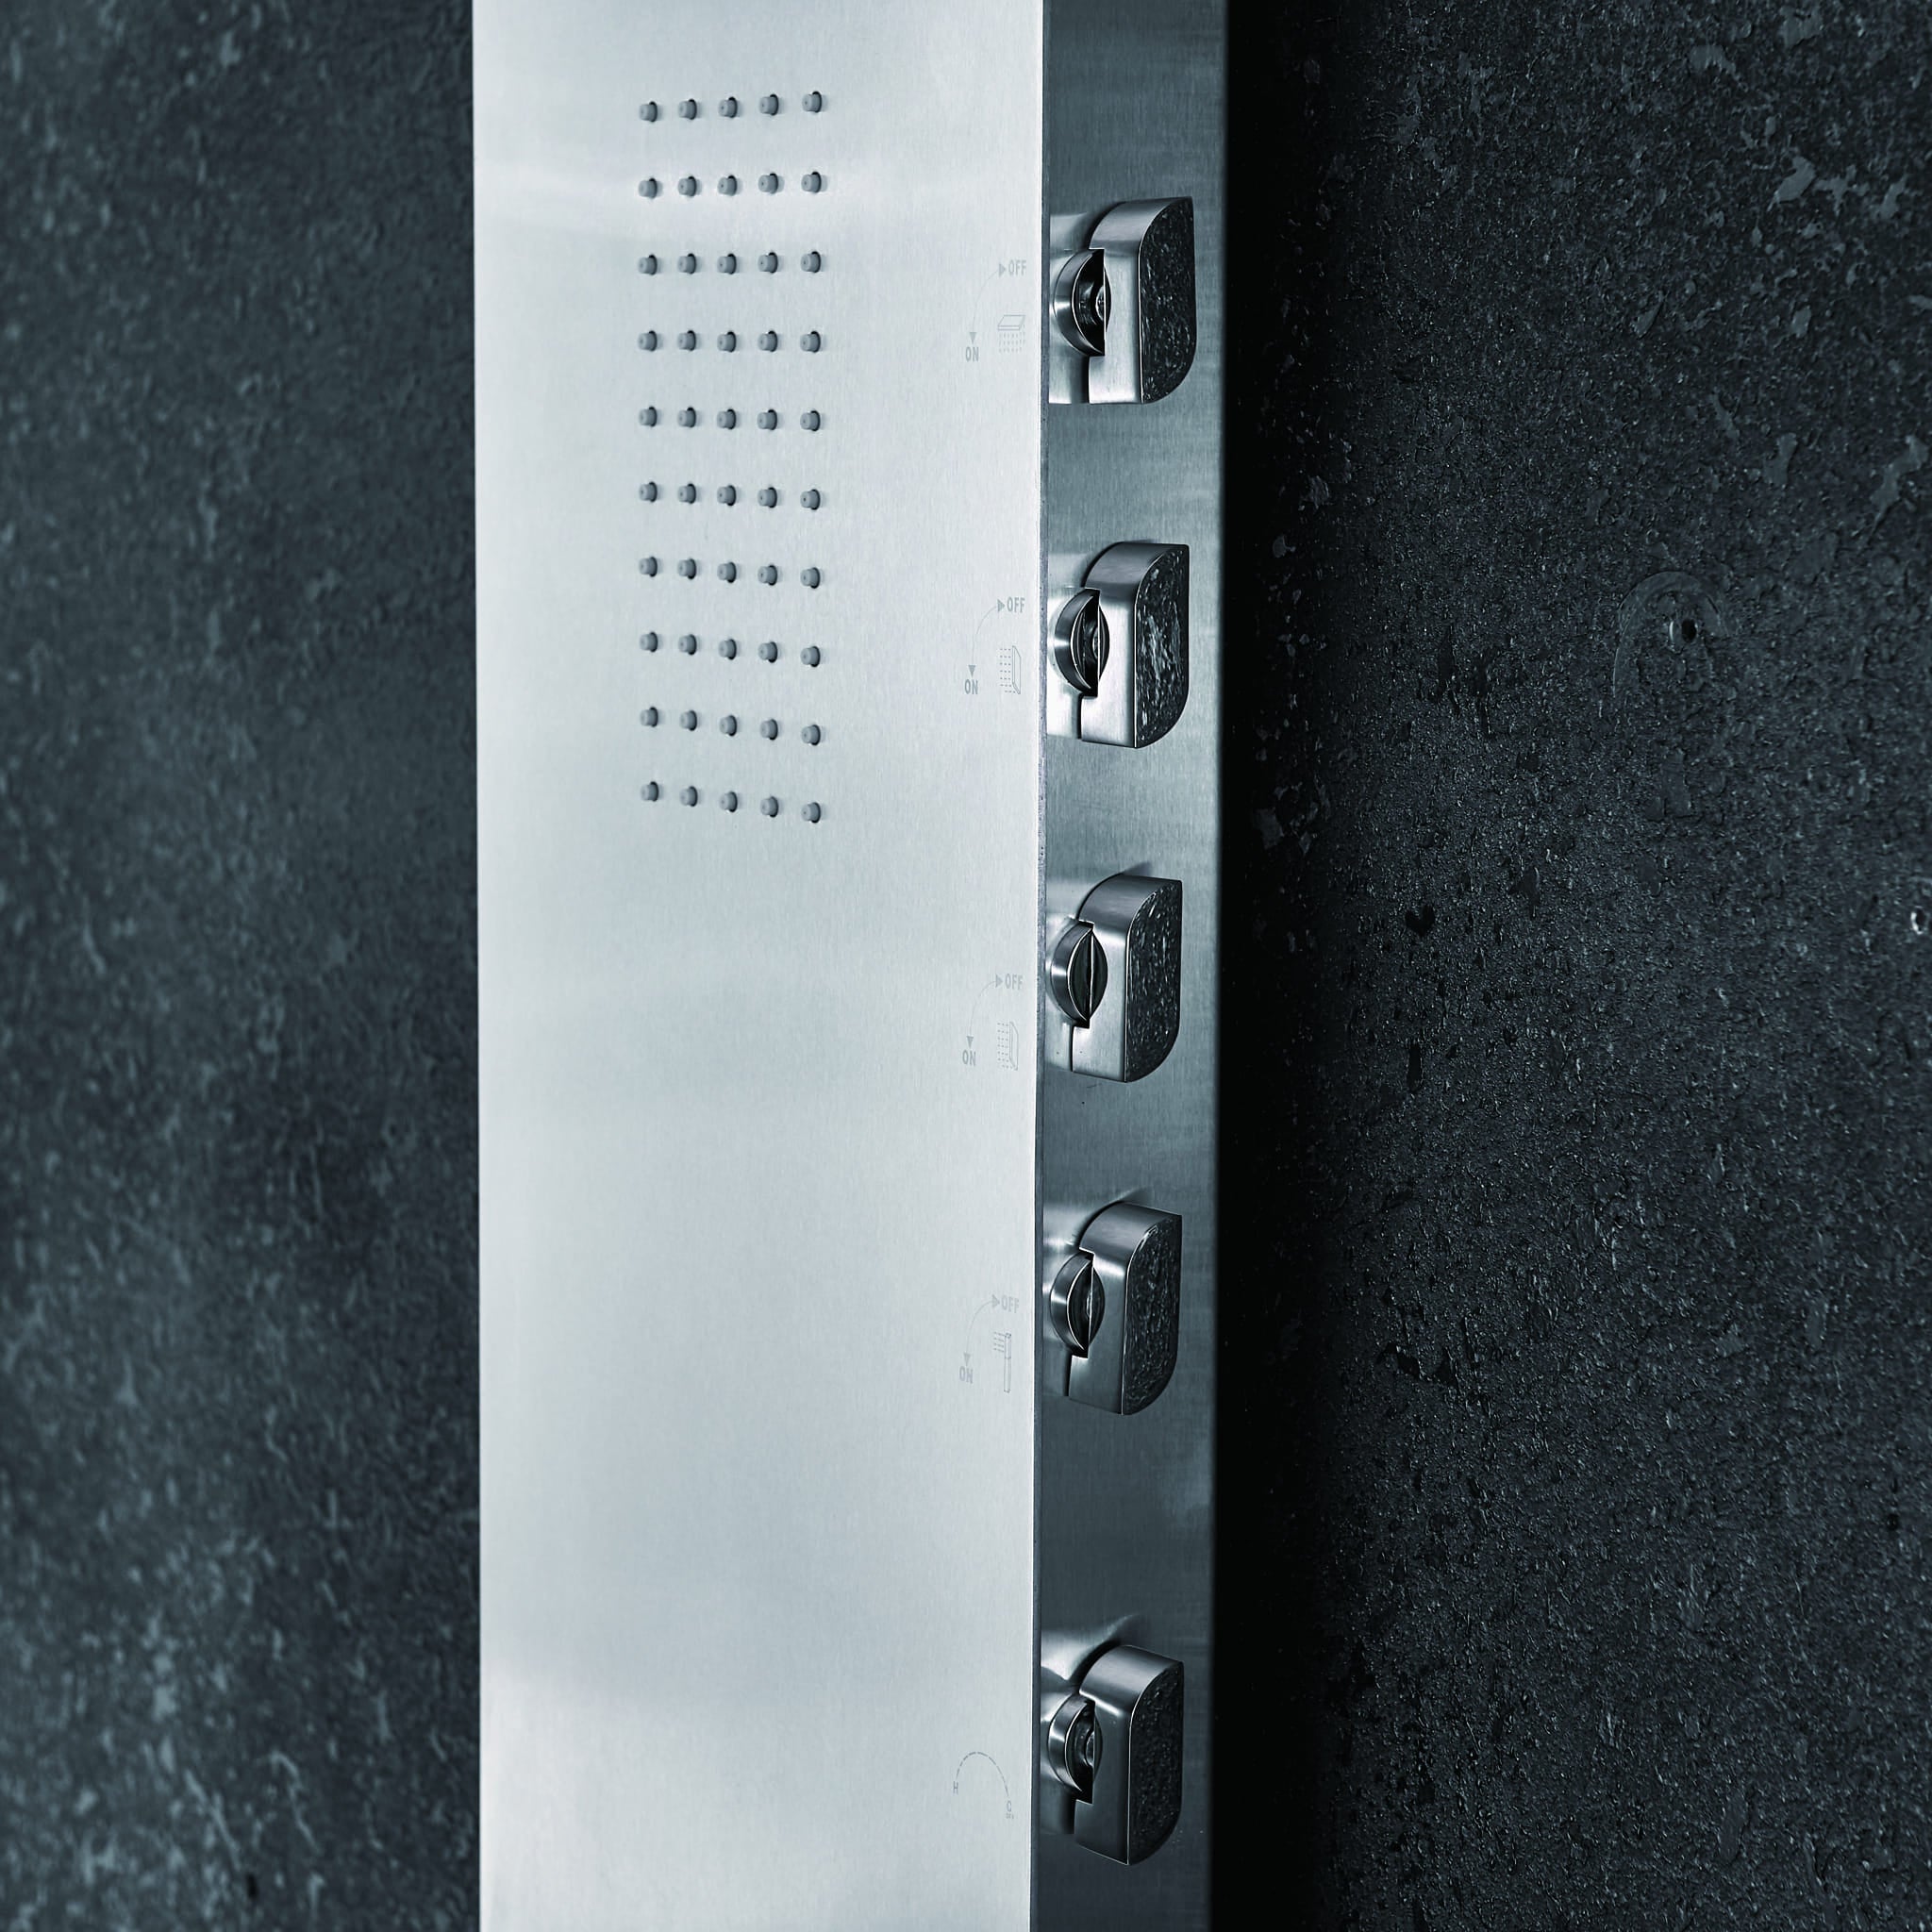 Aquamoon AURA Stainless Steel  Recessed Bathroom Shower Panel 63 x 9.75 with Rainfall Shower Head + Handheld Shower + Massage Body Jets